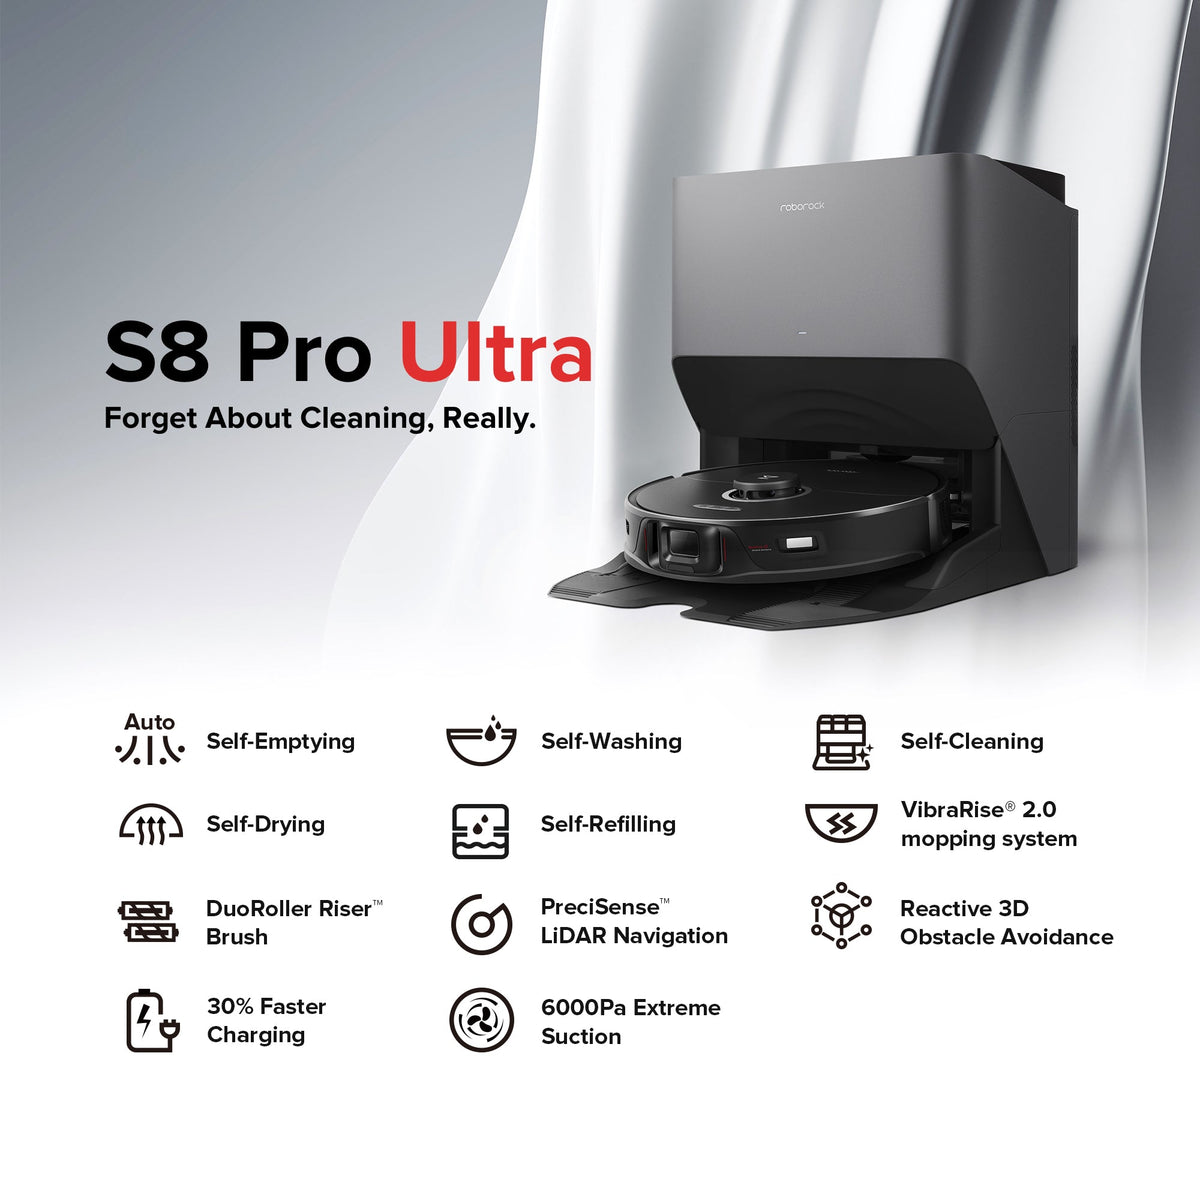 Is Roborock S8 Pro Ultra a good buy?